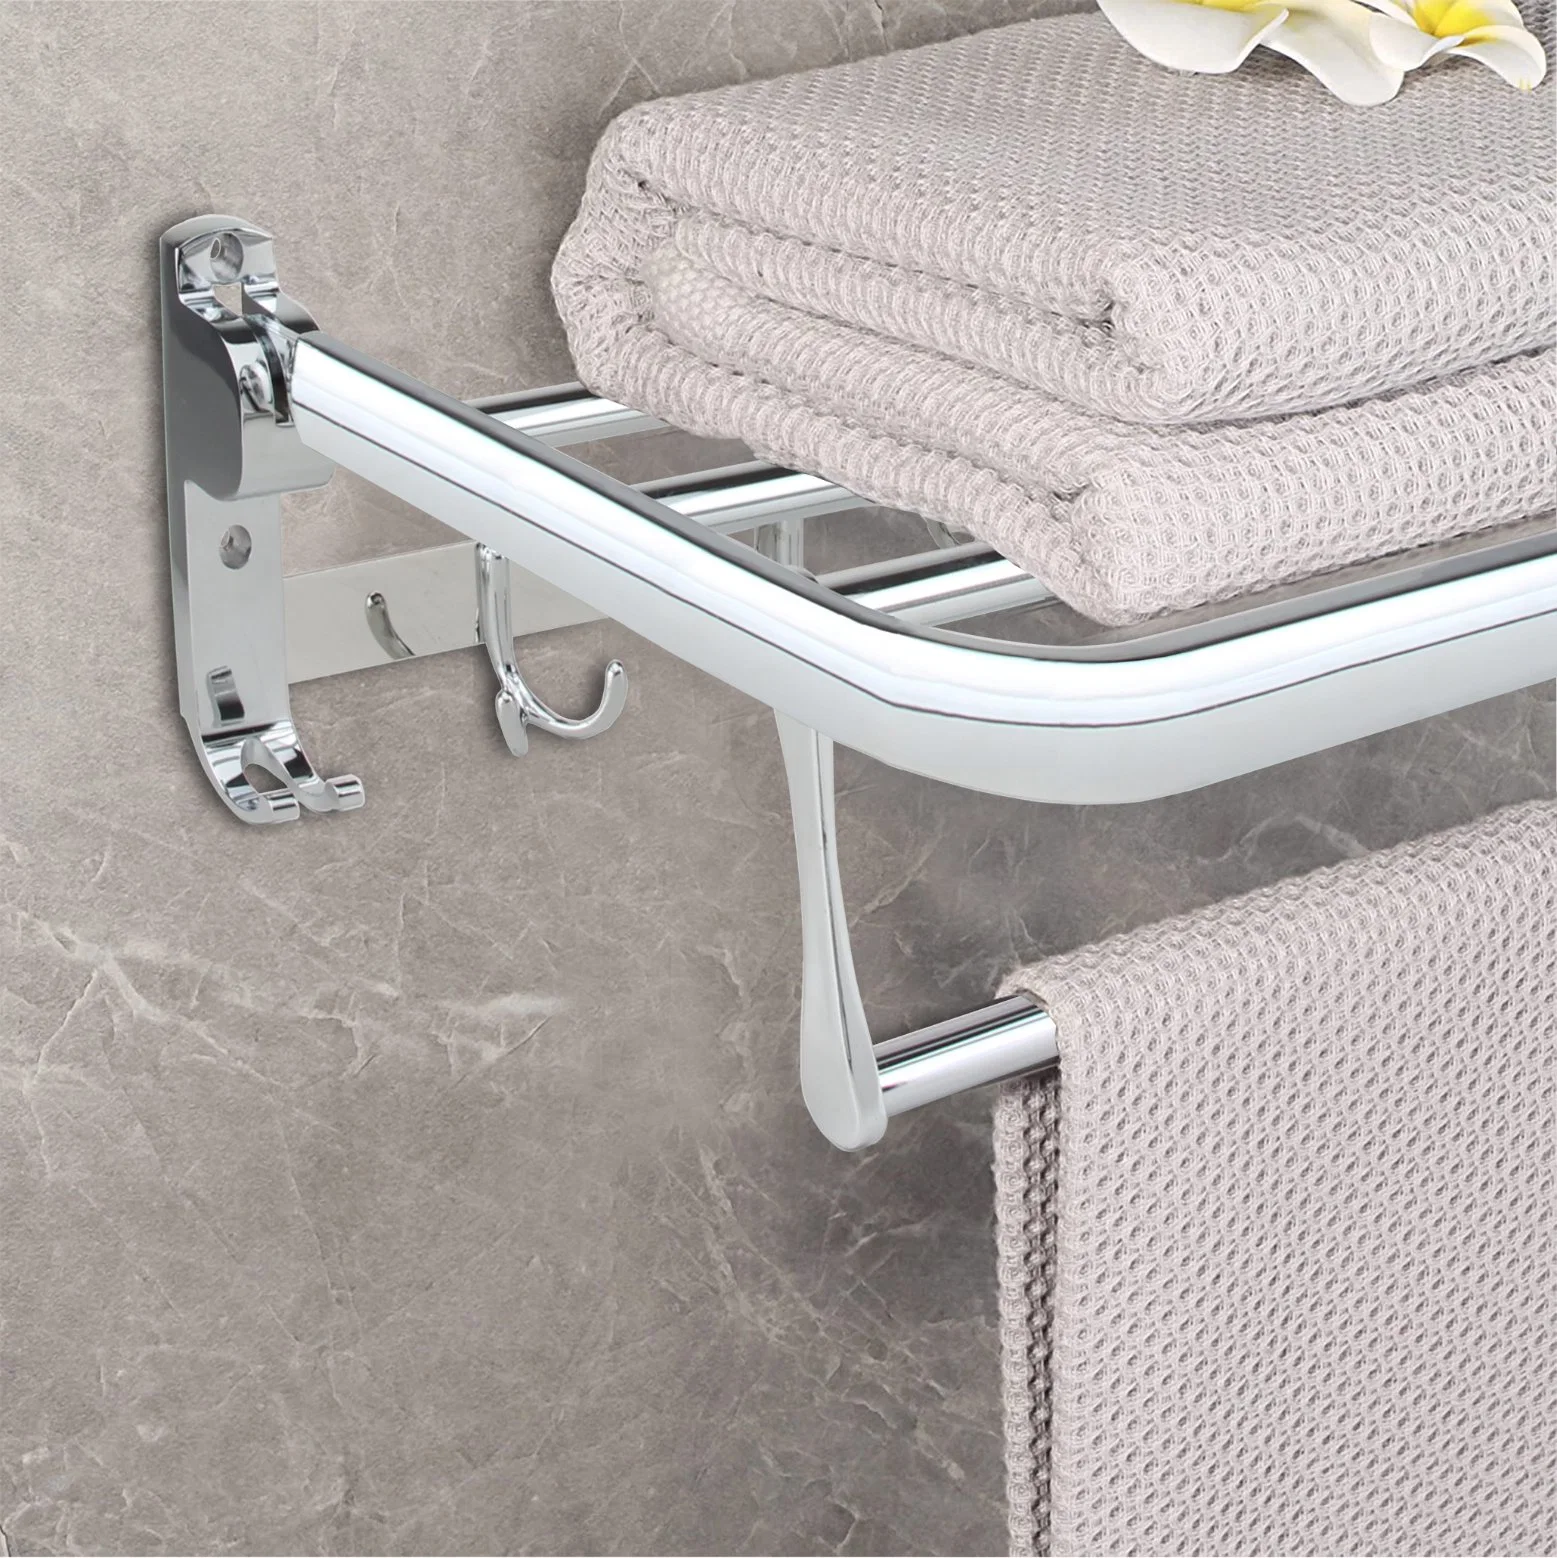 Stainless Steel Bathroom/Hardware/Bath/Shower Set Accessories Towel Rack with Hooks